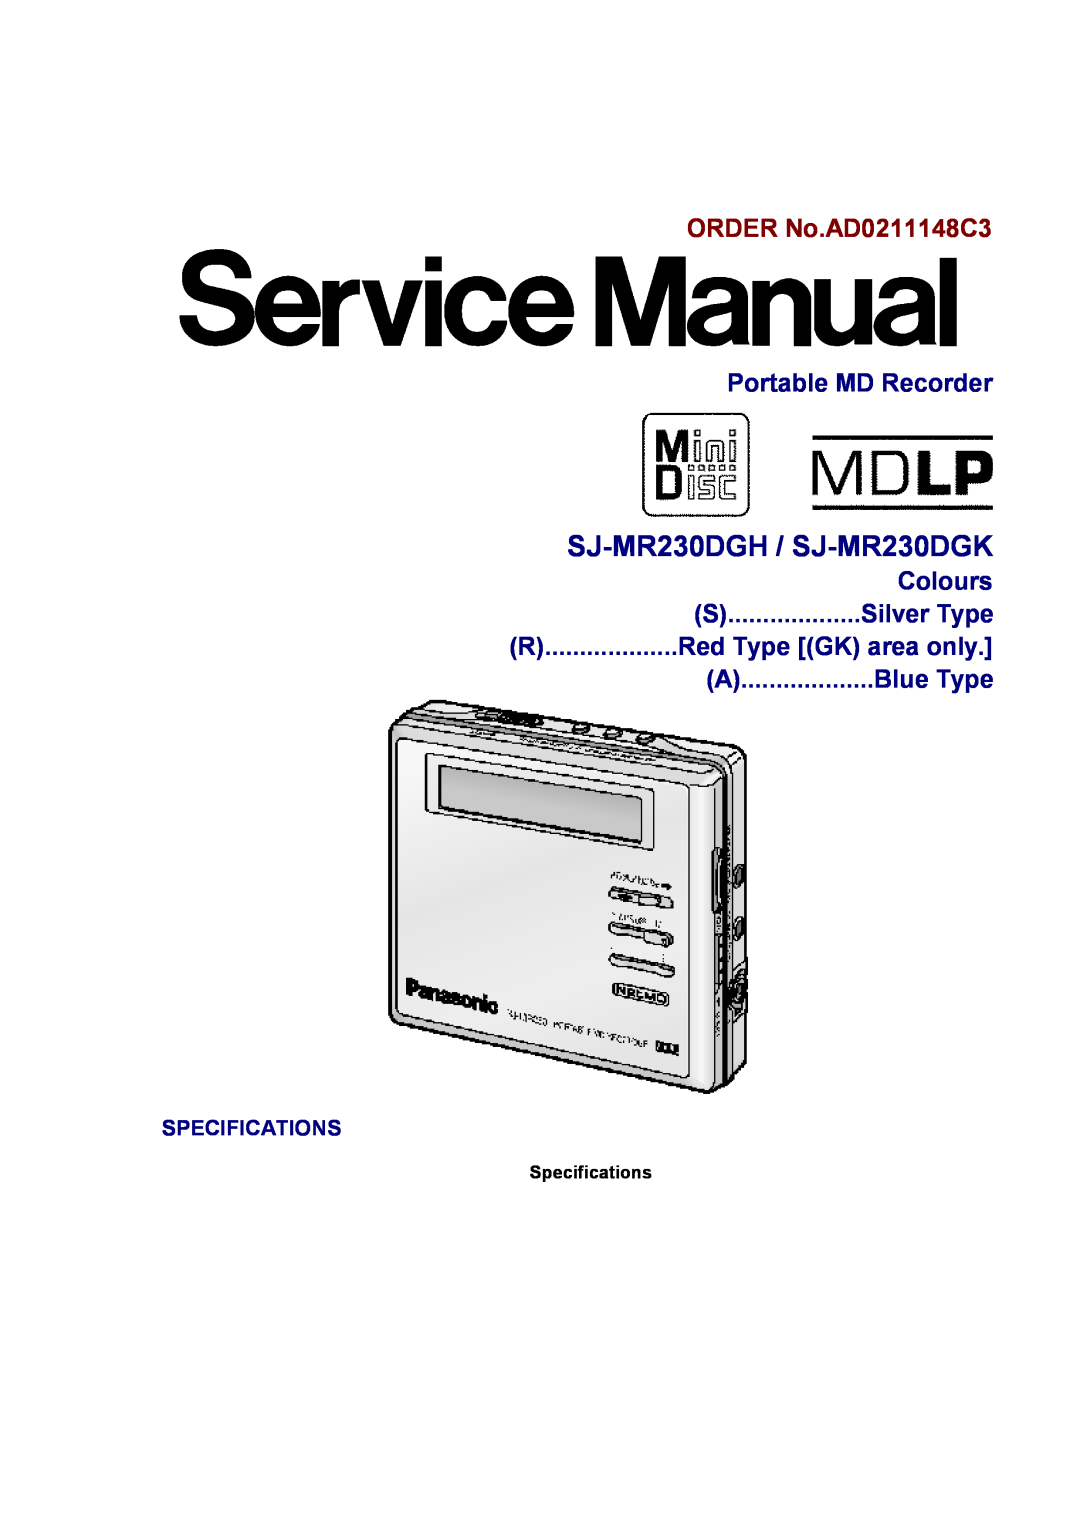 Panasonic specifications Portable MD Recorder, Colours, Blue Type, SJ-MR230DGH / SJ-MR230DGK, ORDER No.AD0211148C3 